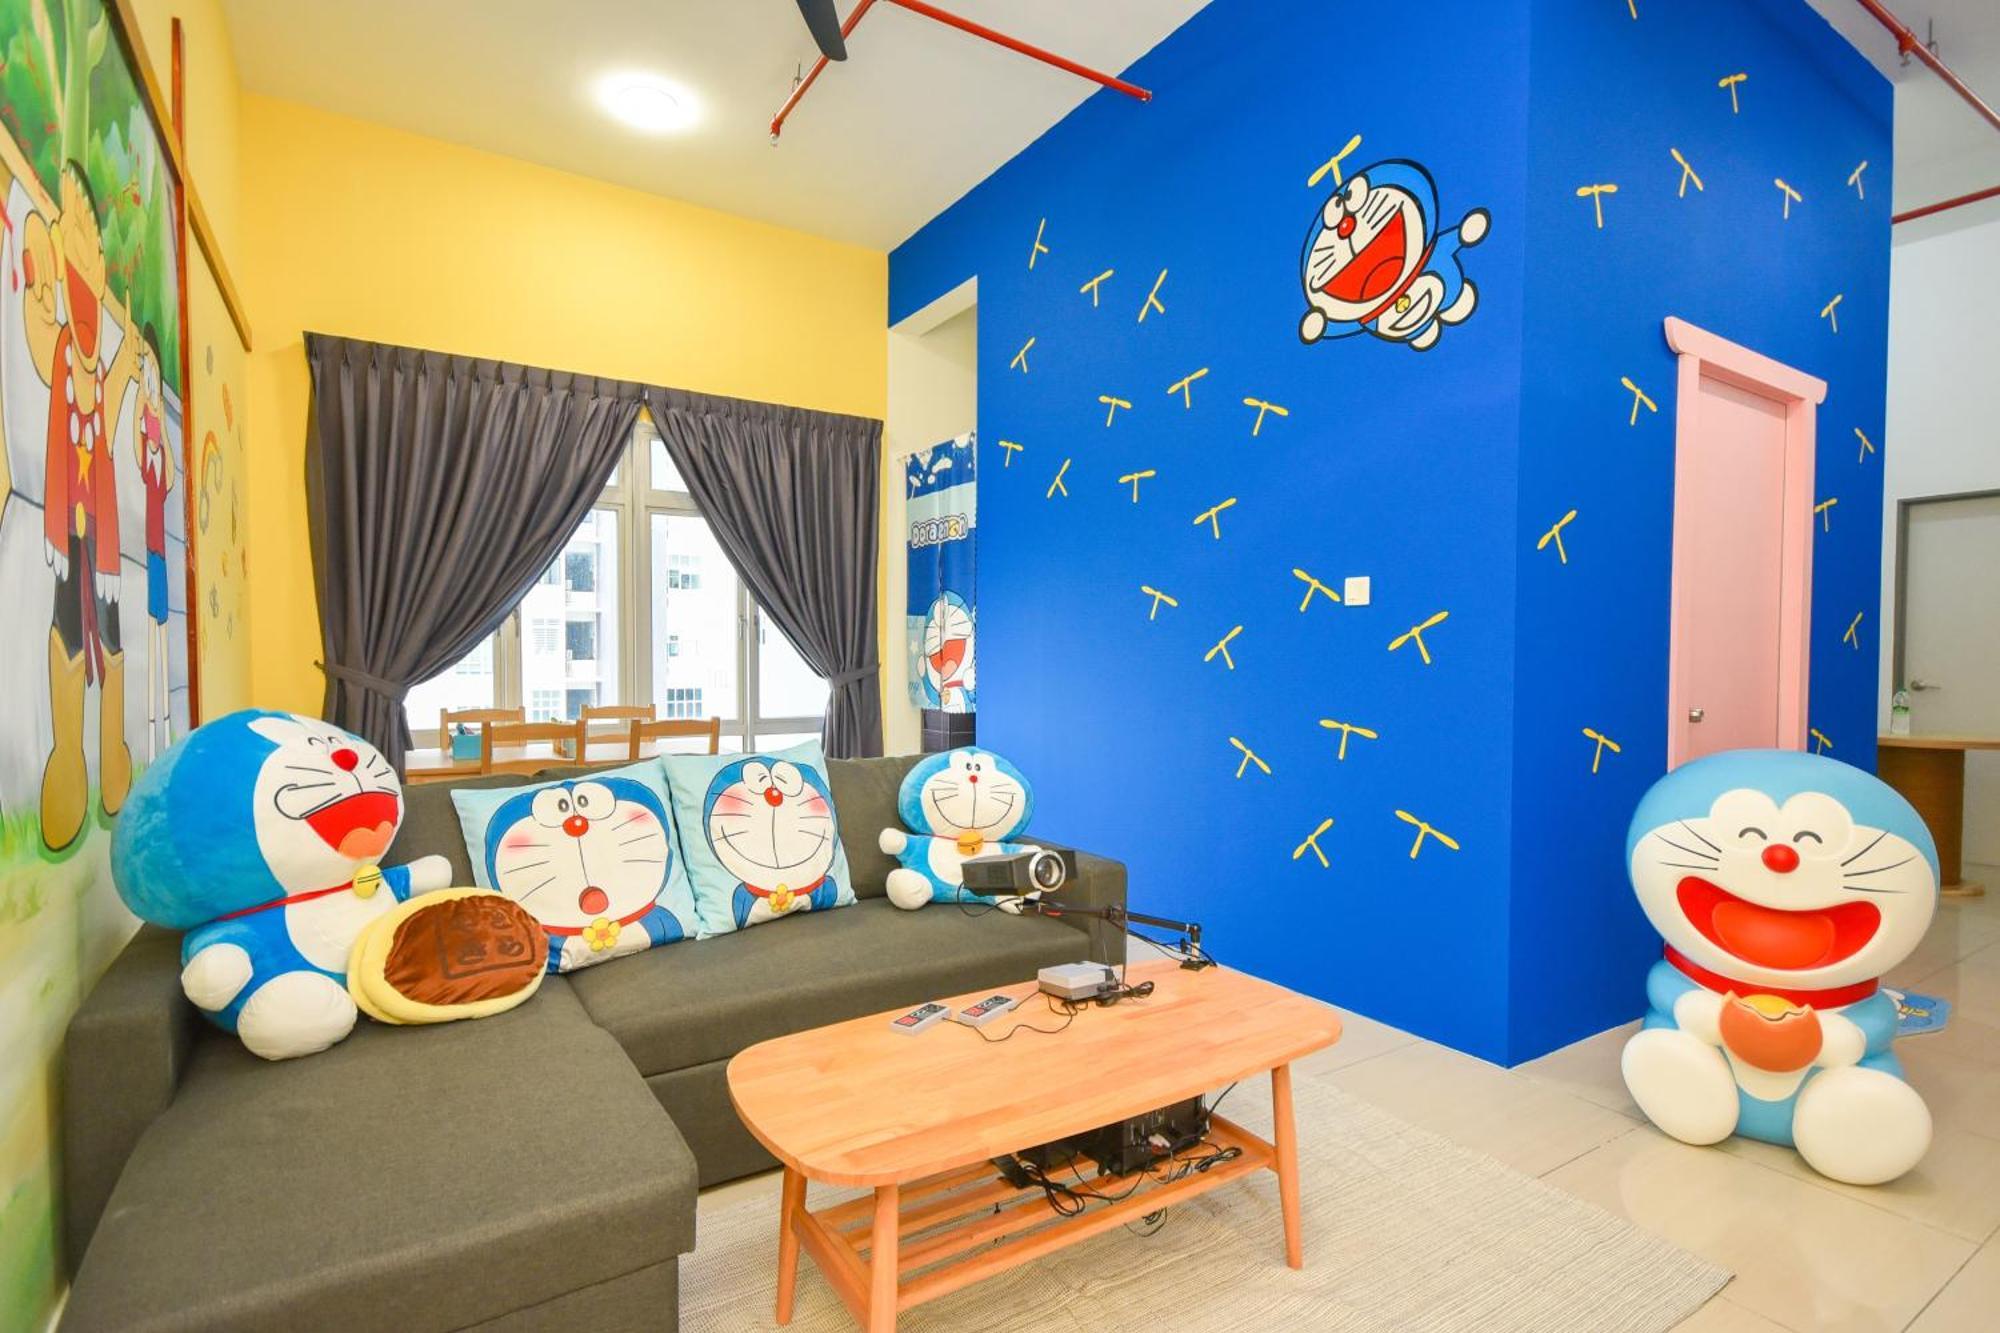 Manhattan Theme Suite By Nest Home At Austin Heights Johor Bahru Exteriör bild